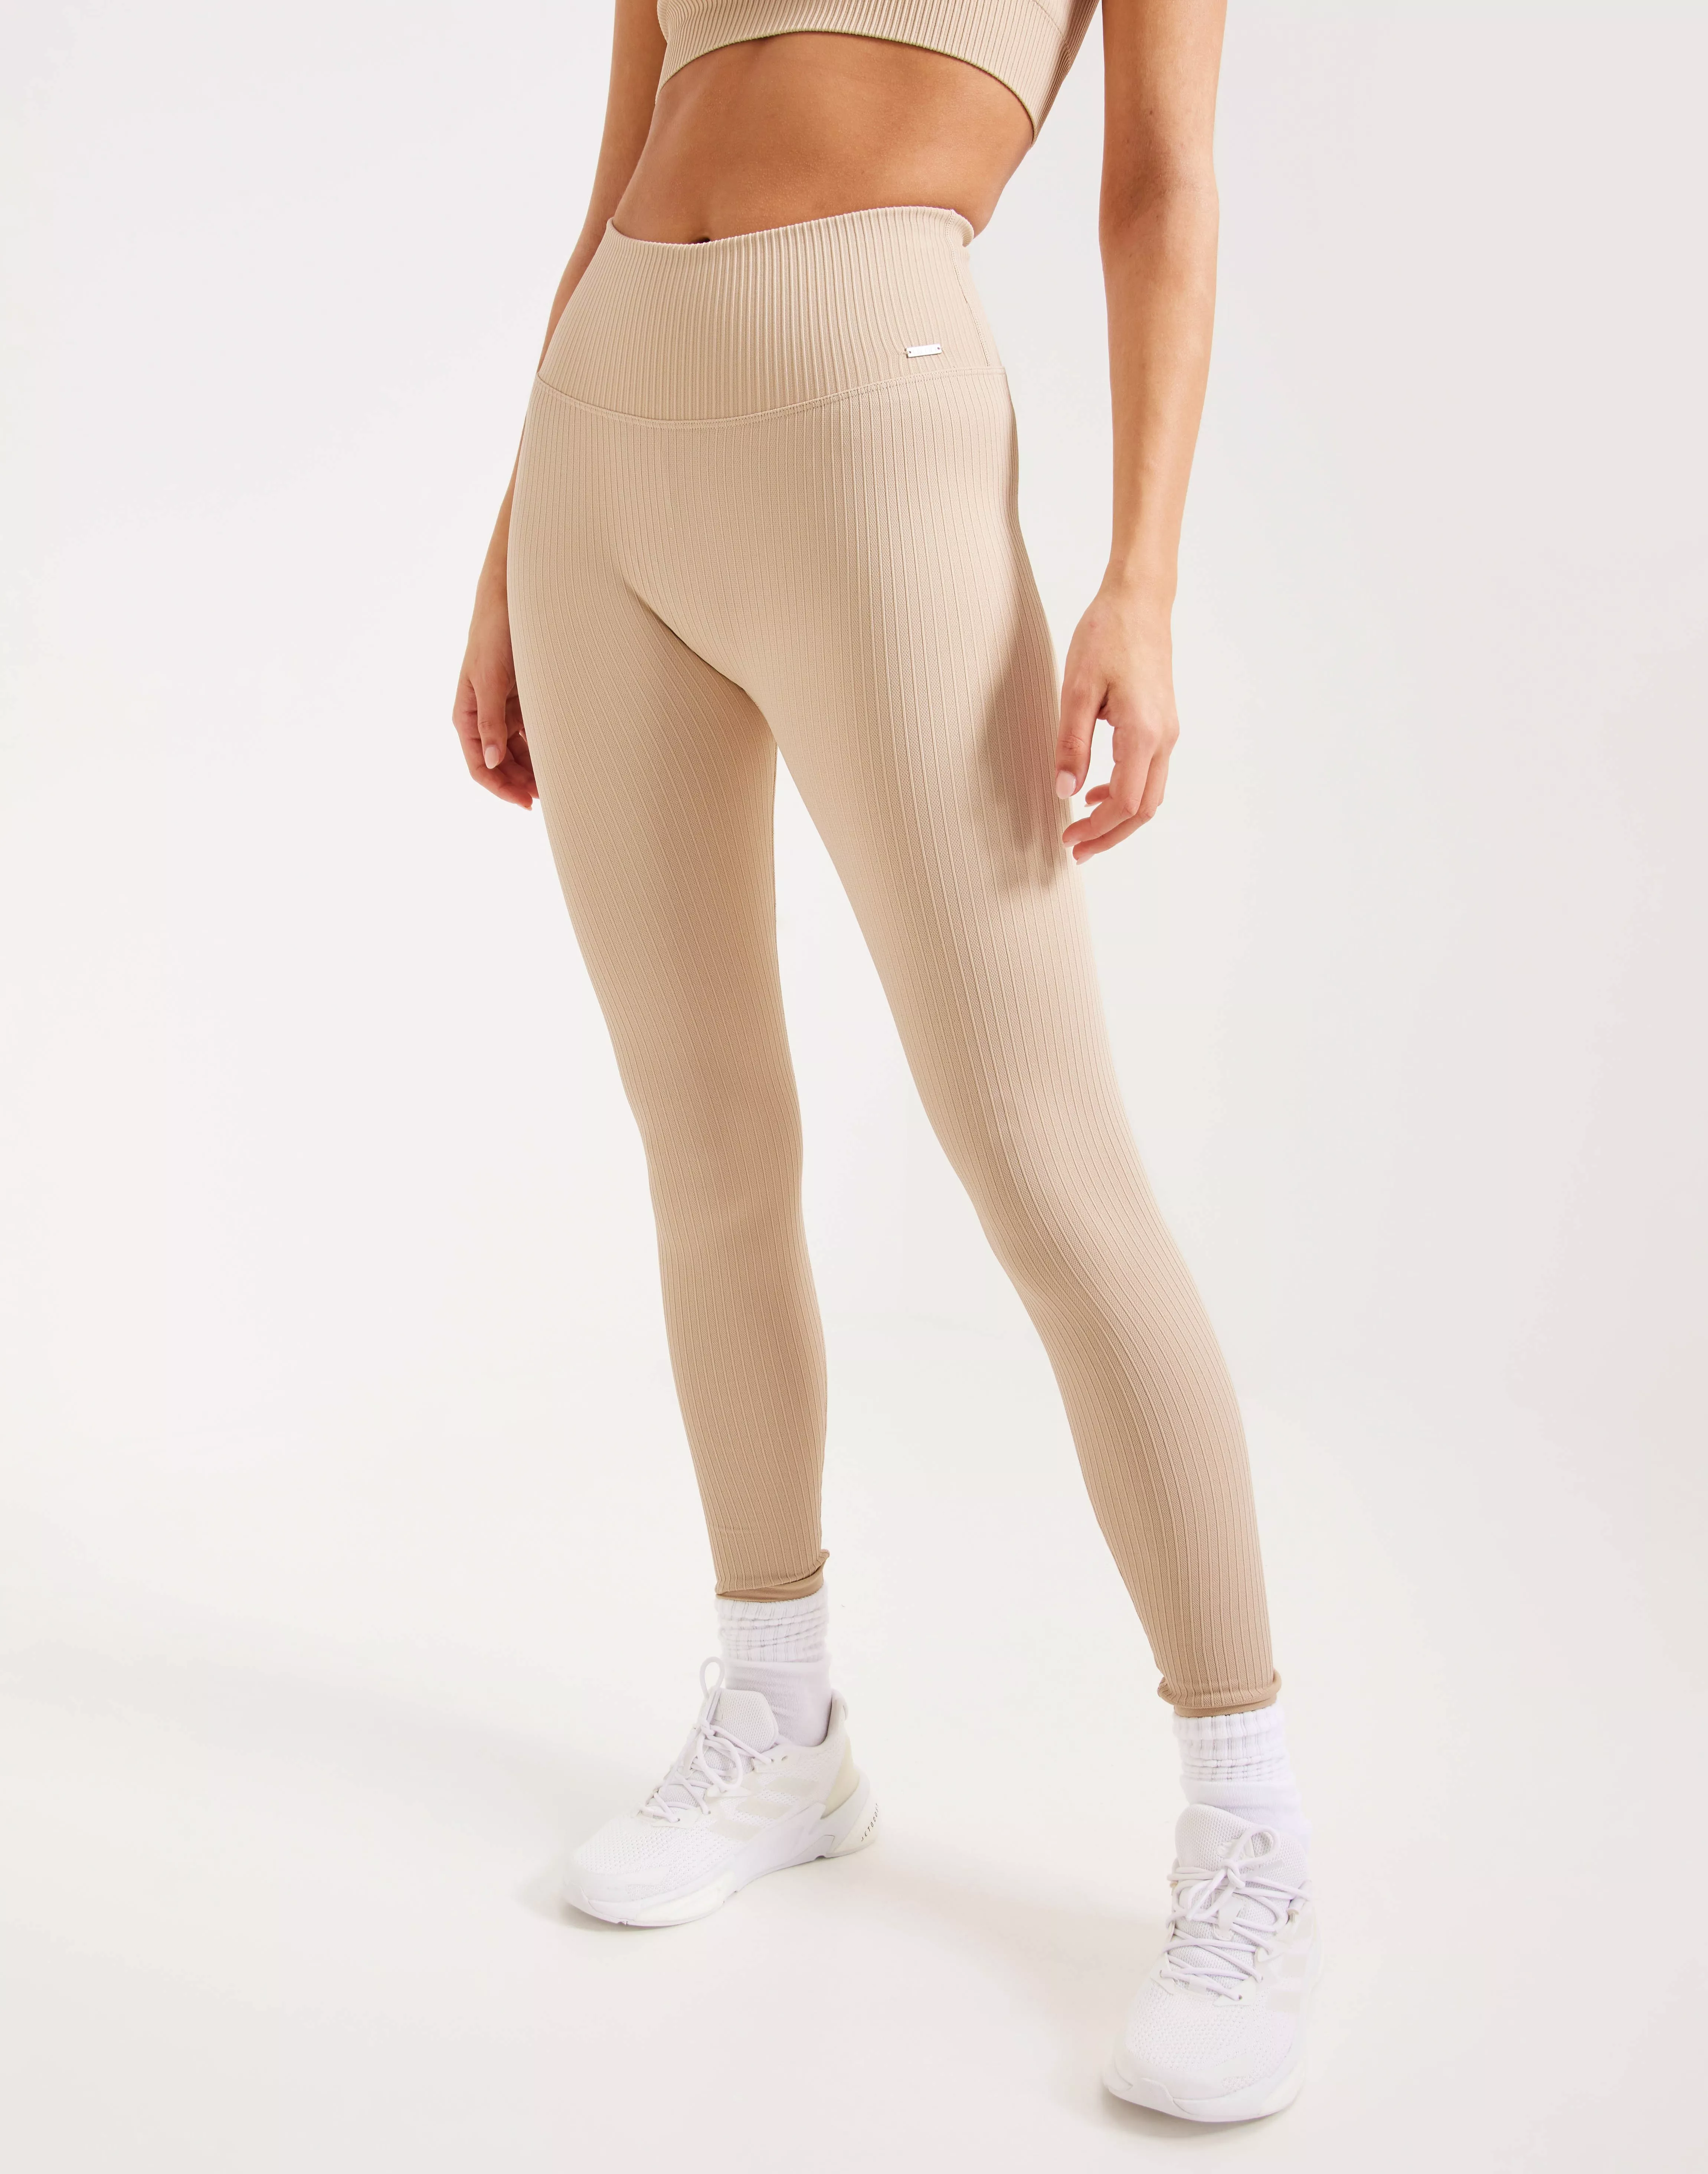 Flared Leggings – Stylish flare leggings for women – AIM'N EU